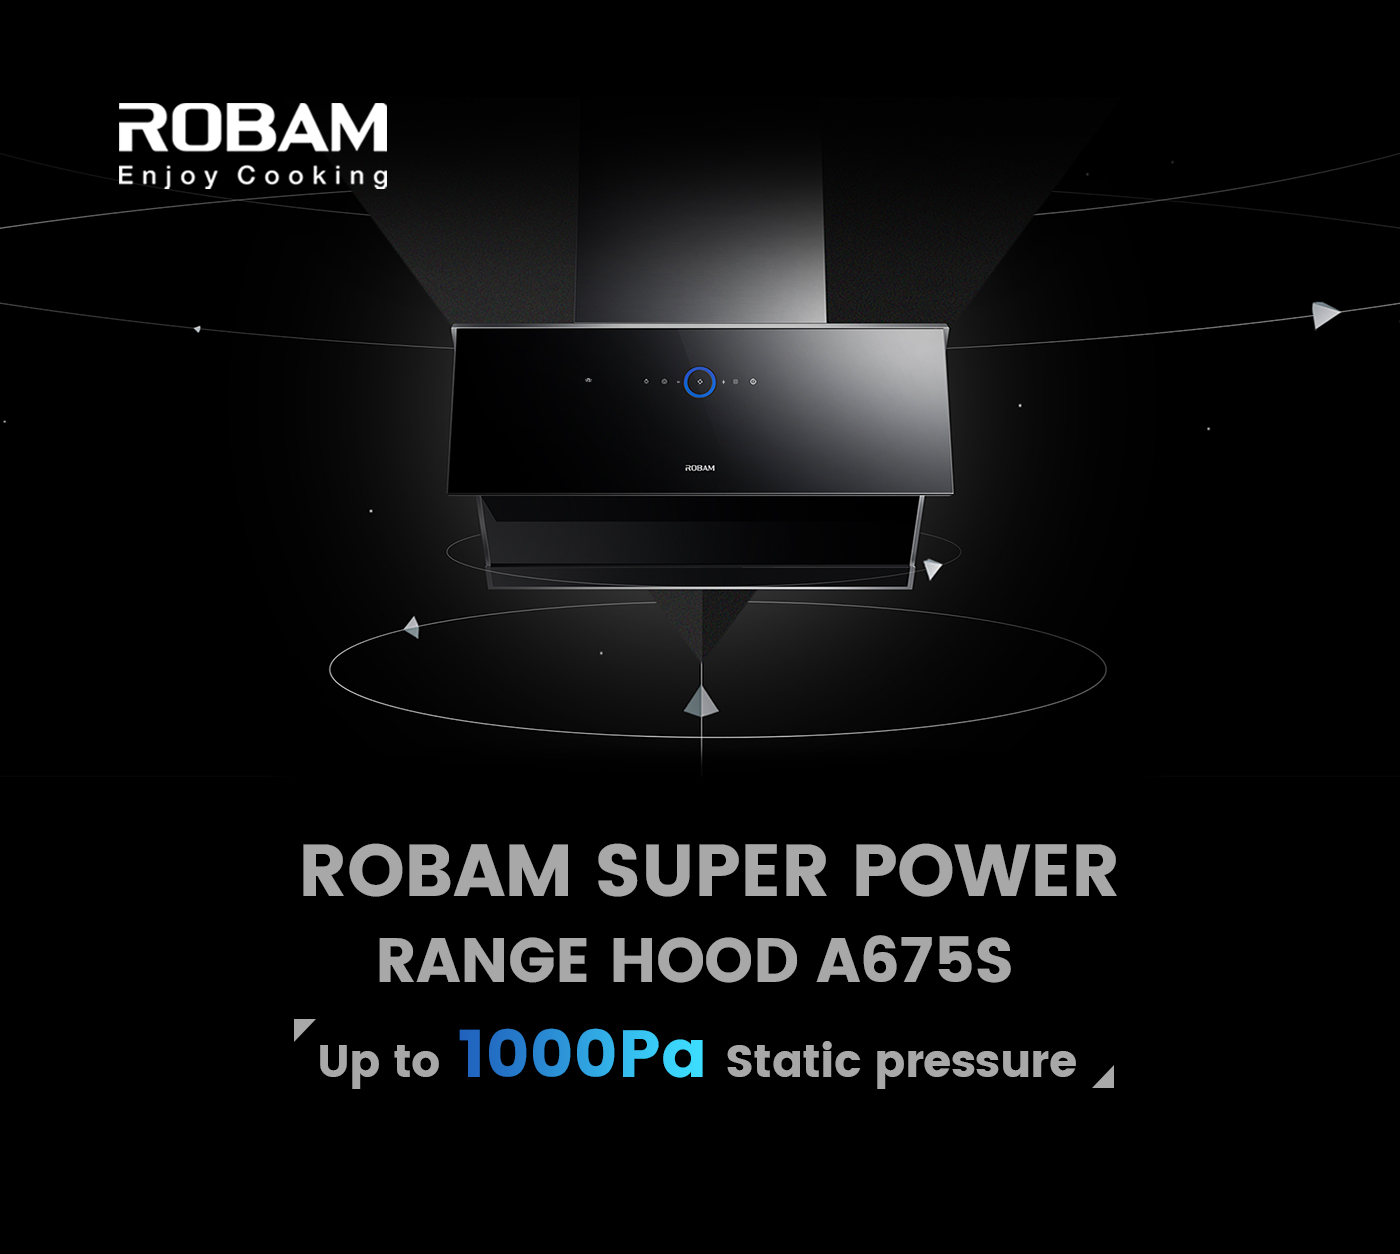 Why named it the super powerful range hood？